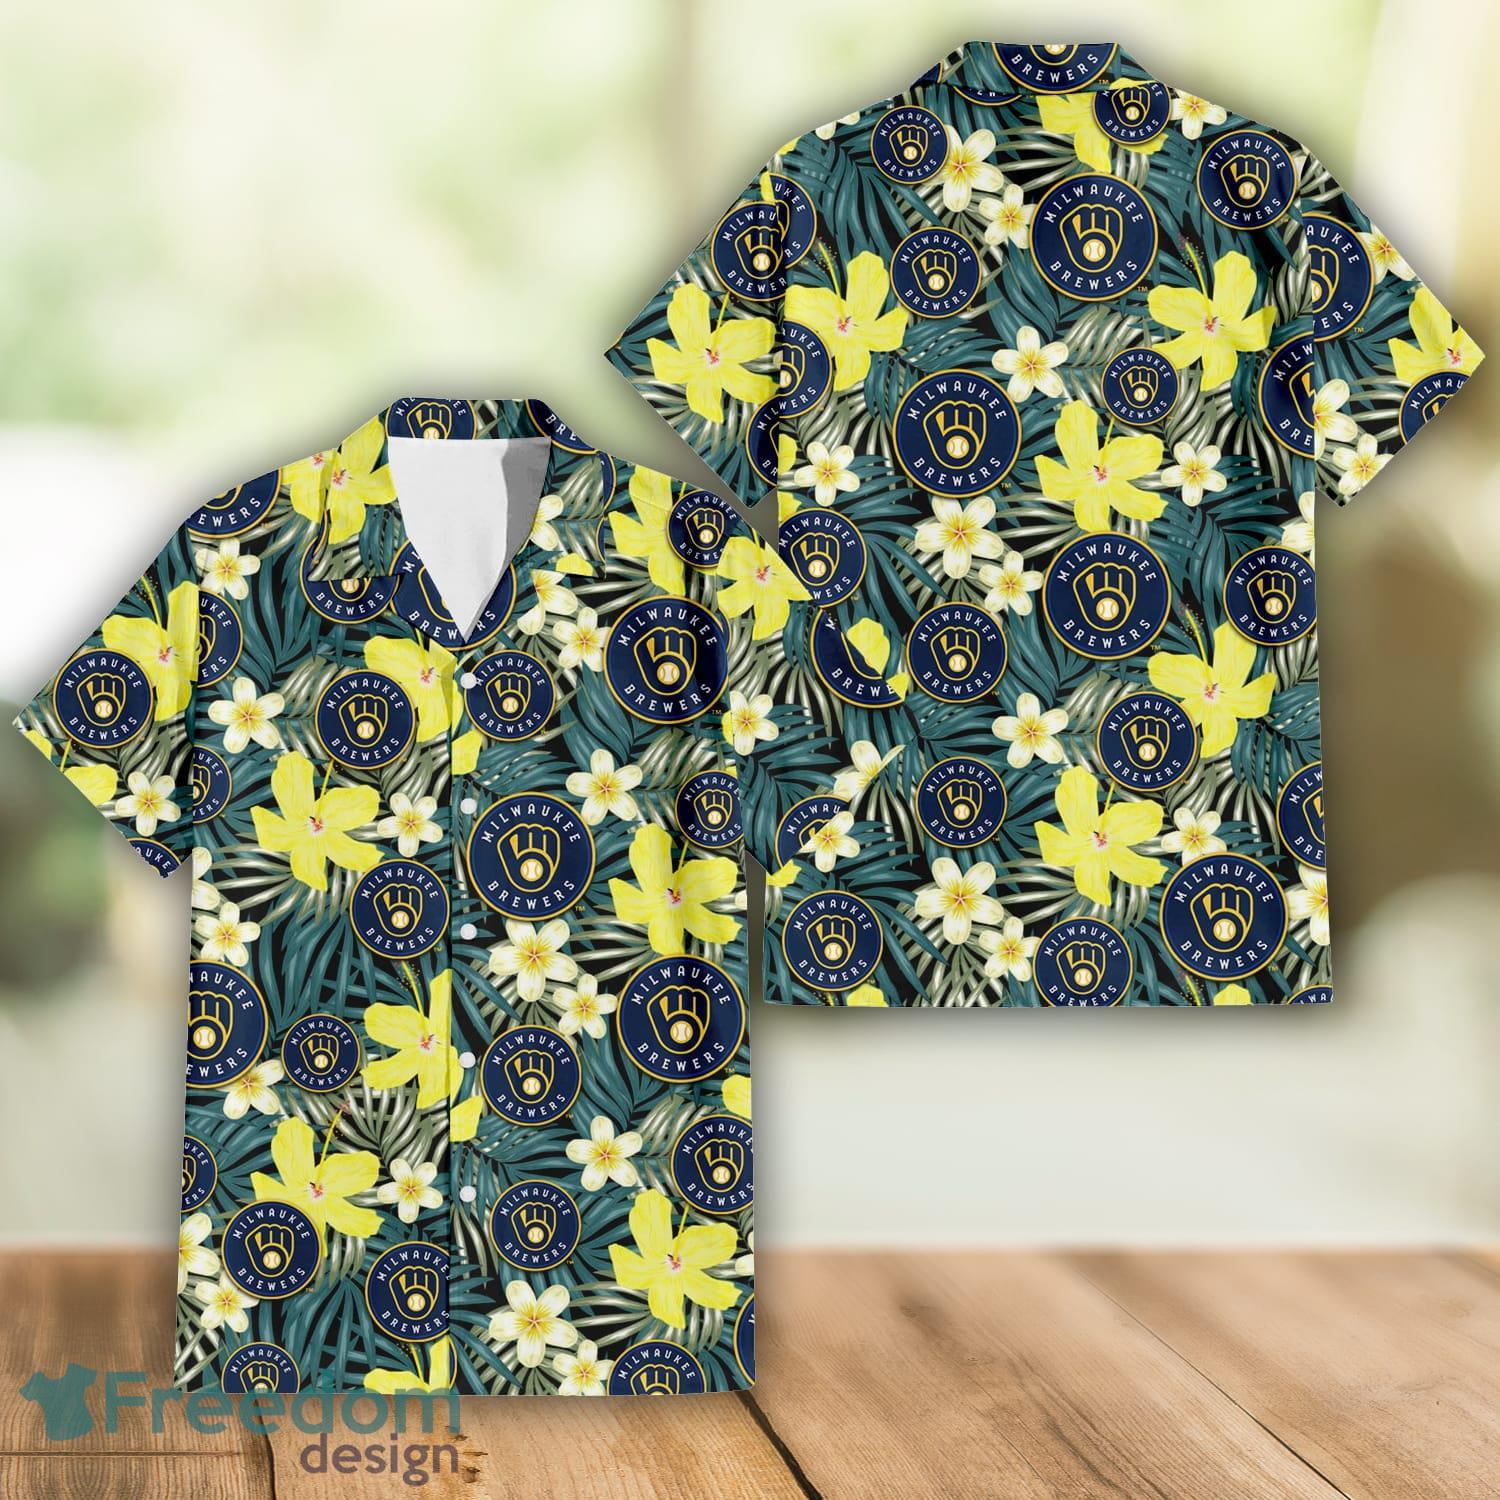 Milwaukee Brewers Limited Edition Hawaiian Shirt And Short Set -  Freedomdesign